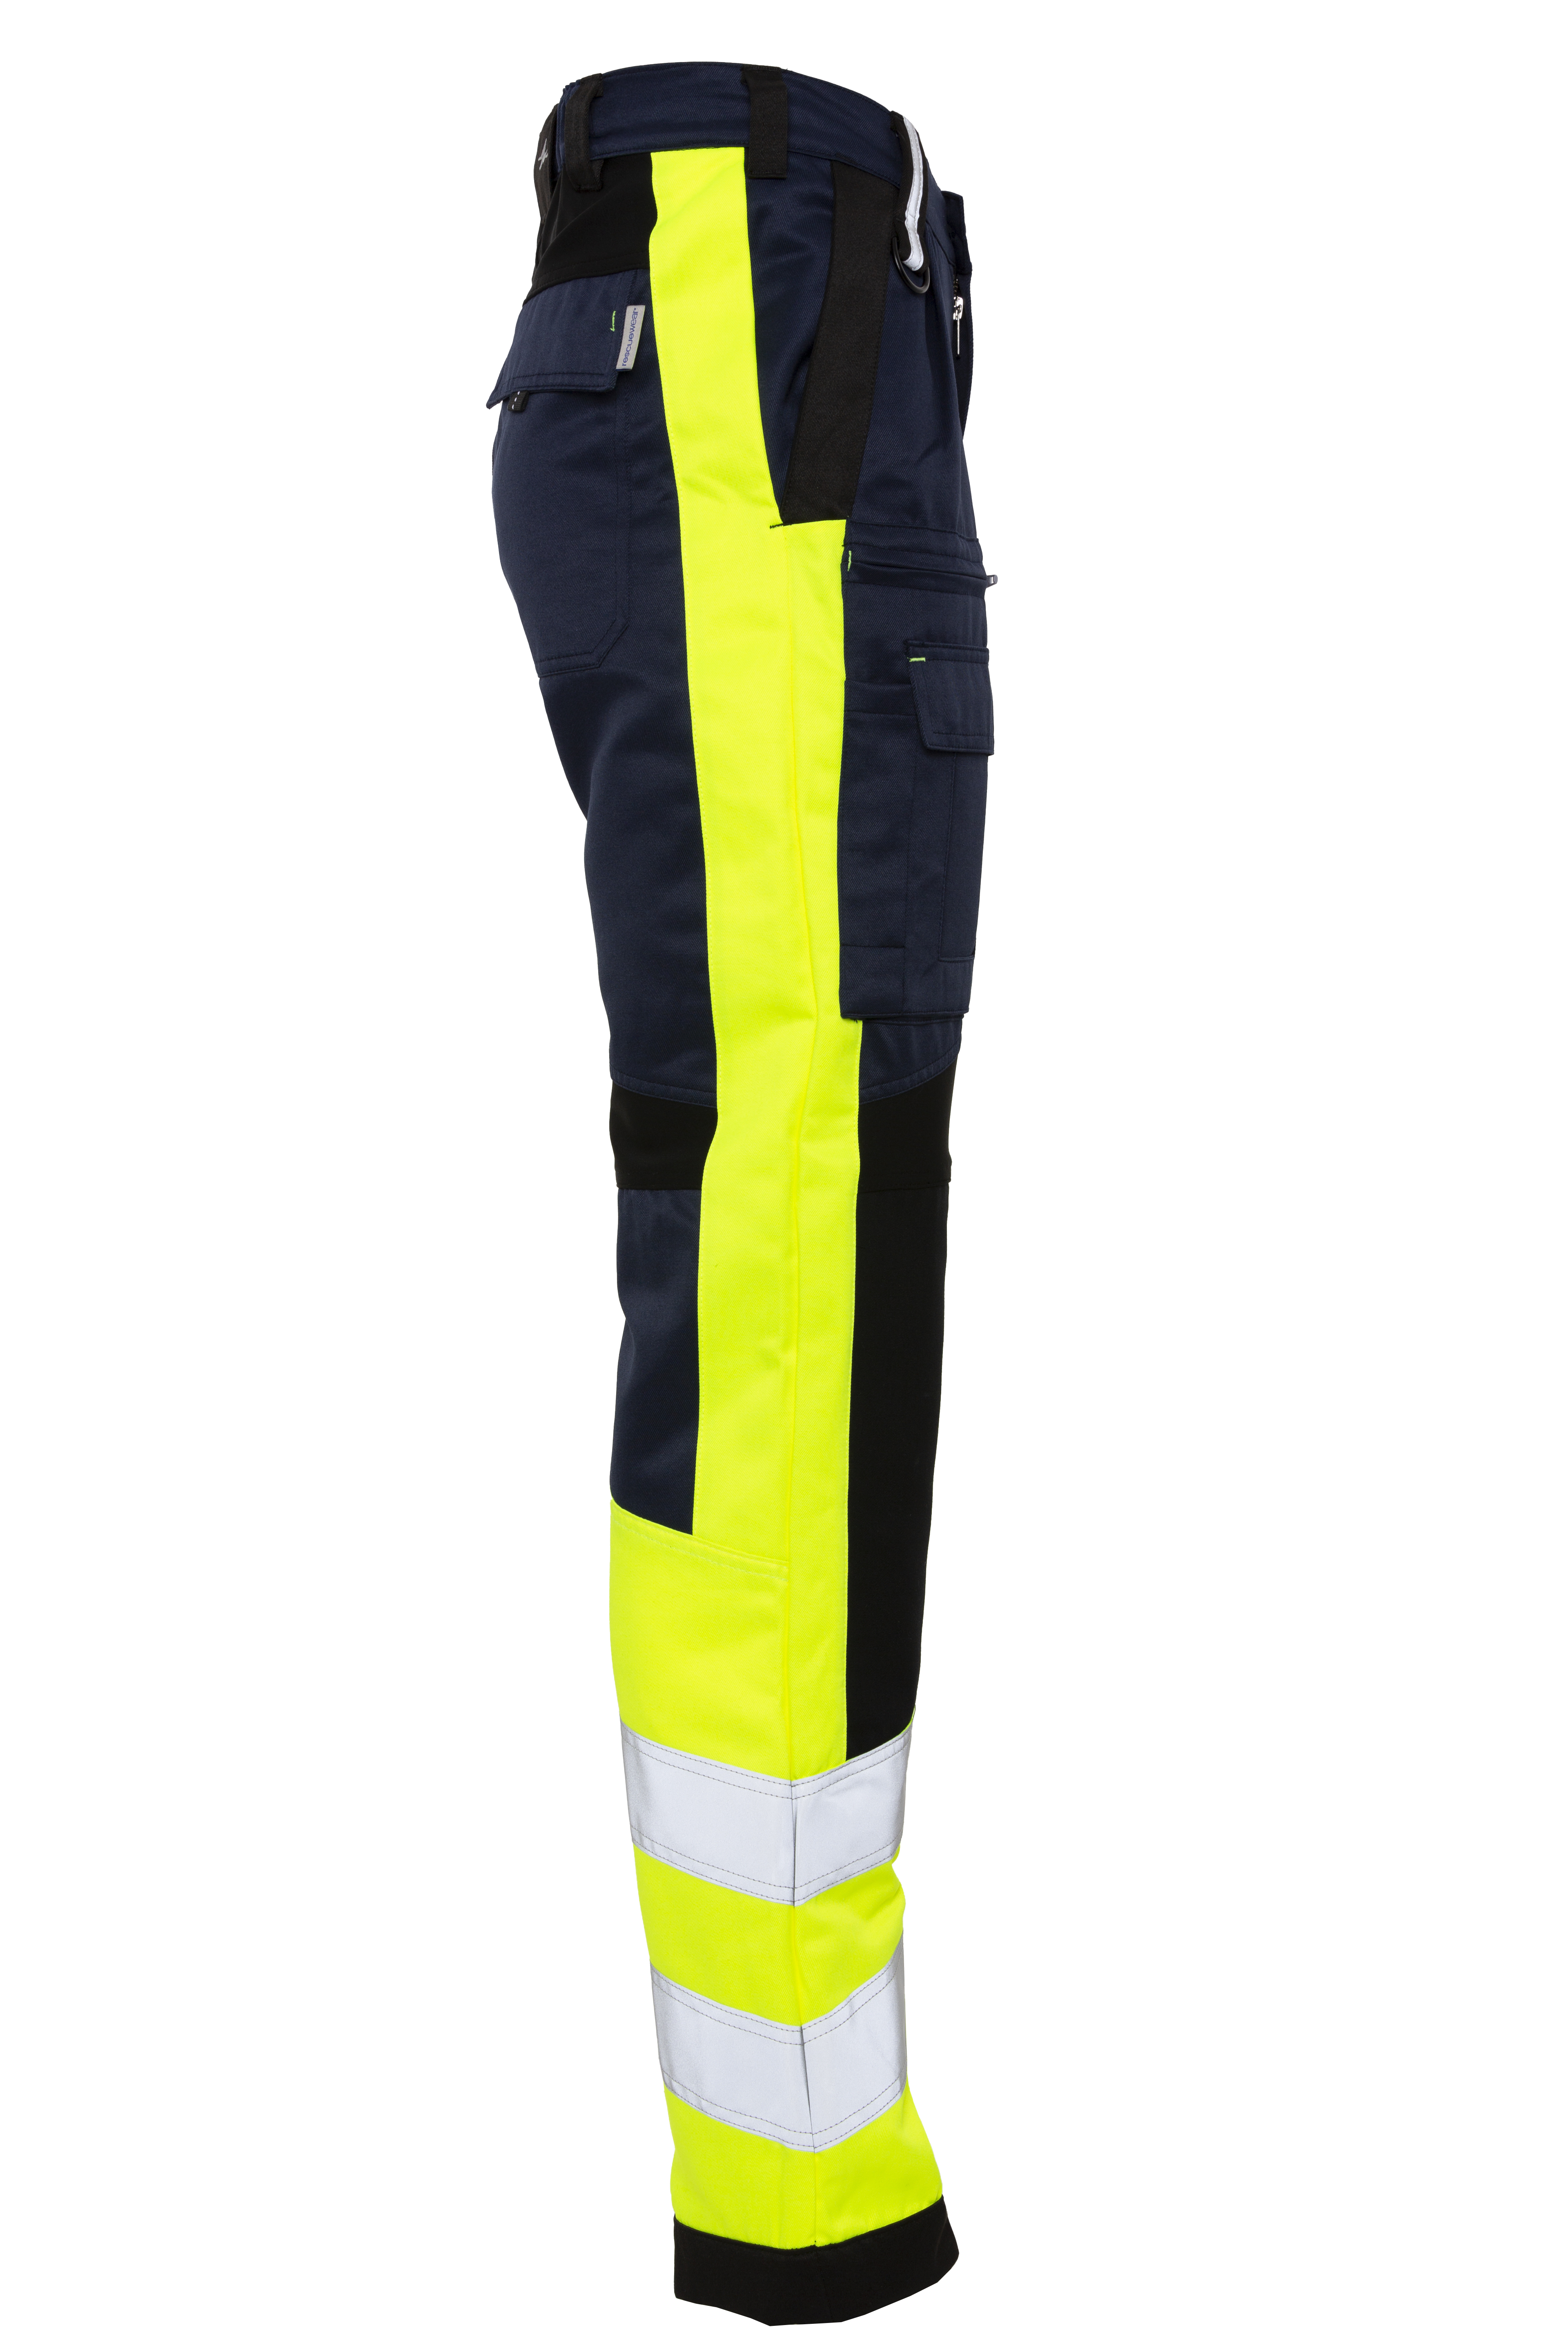 Rescuewear Unisex Hose Stretch 1 Marieneblau | / 28 Klasse Gelb HiVis Schwarz / Neon